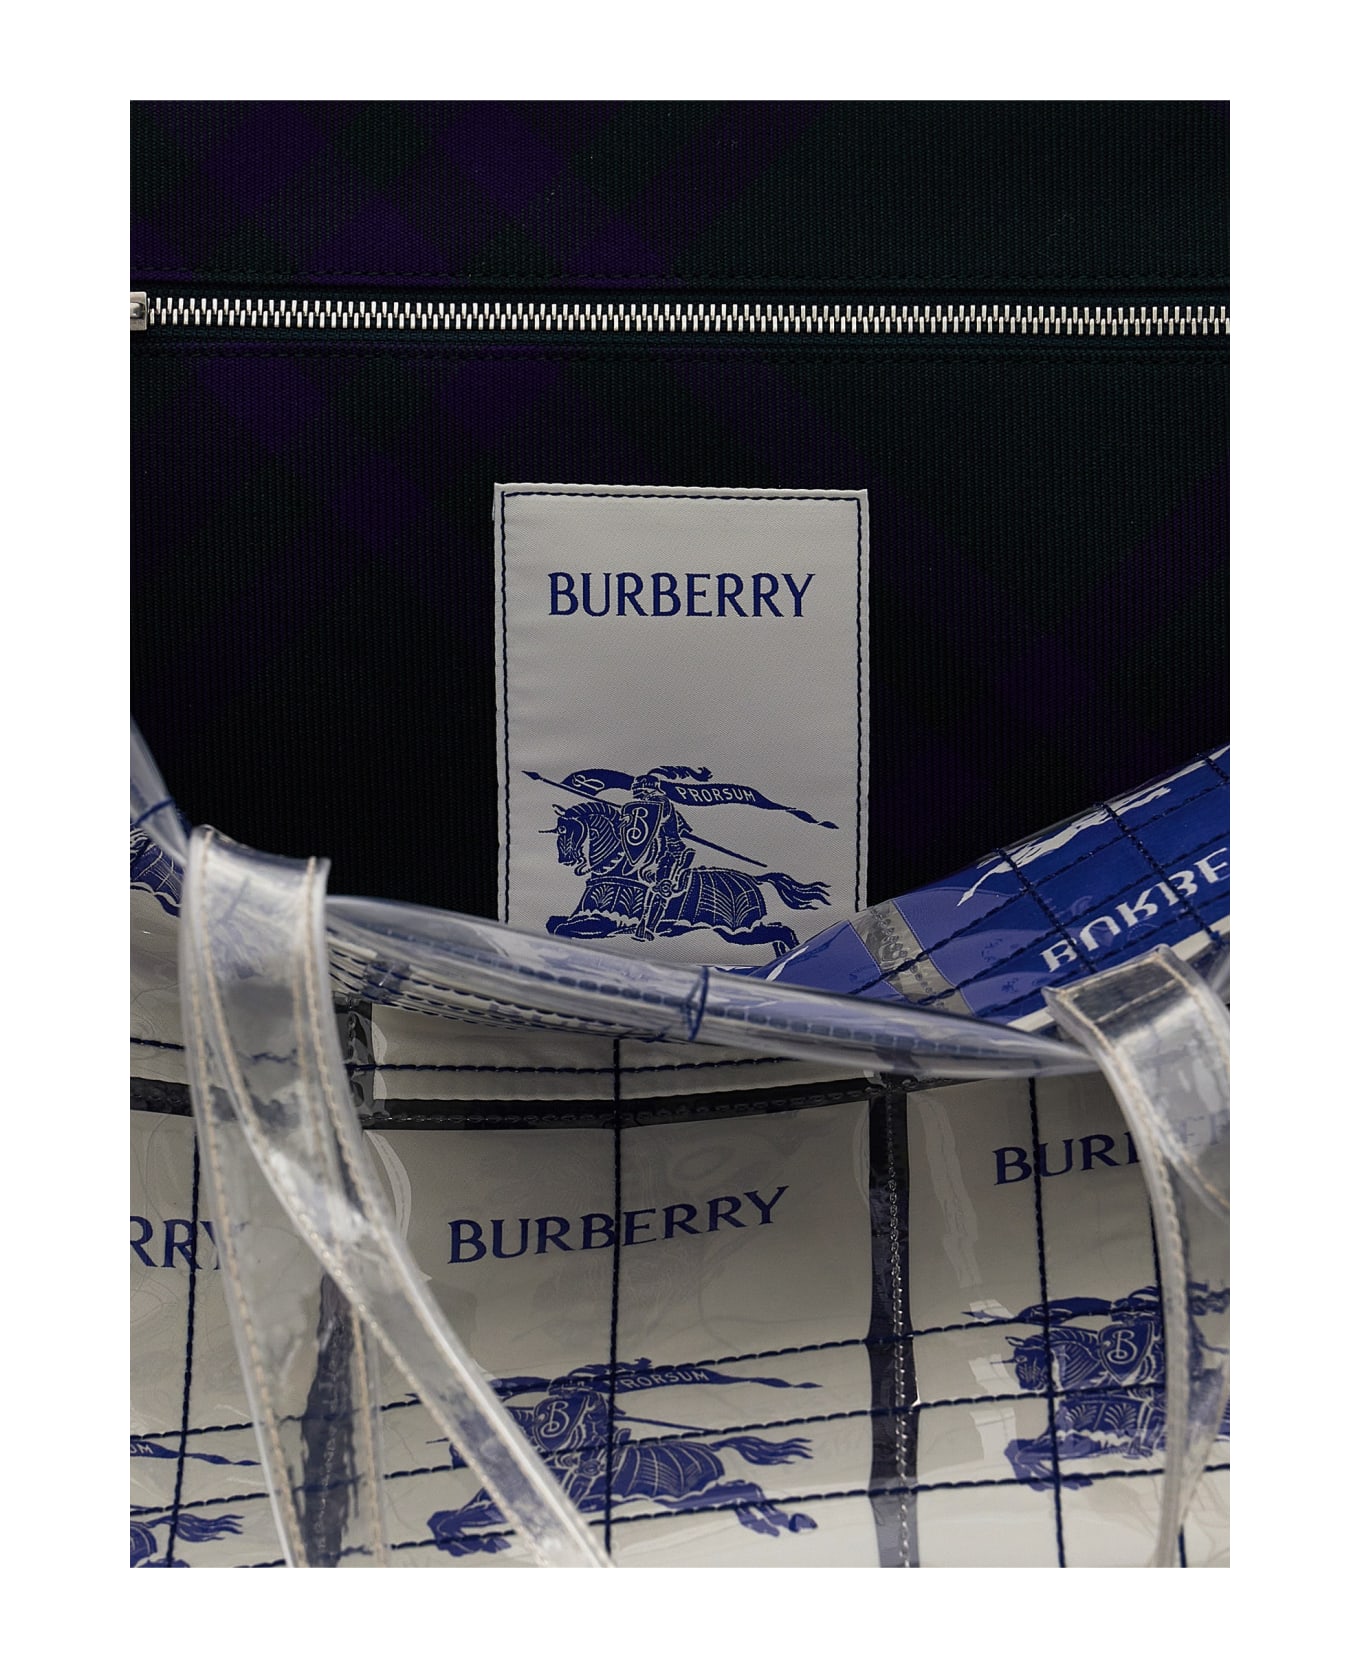 Burberry 'ekd' Label Shopping Bag - Multicolor